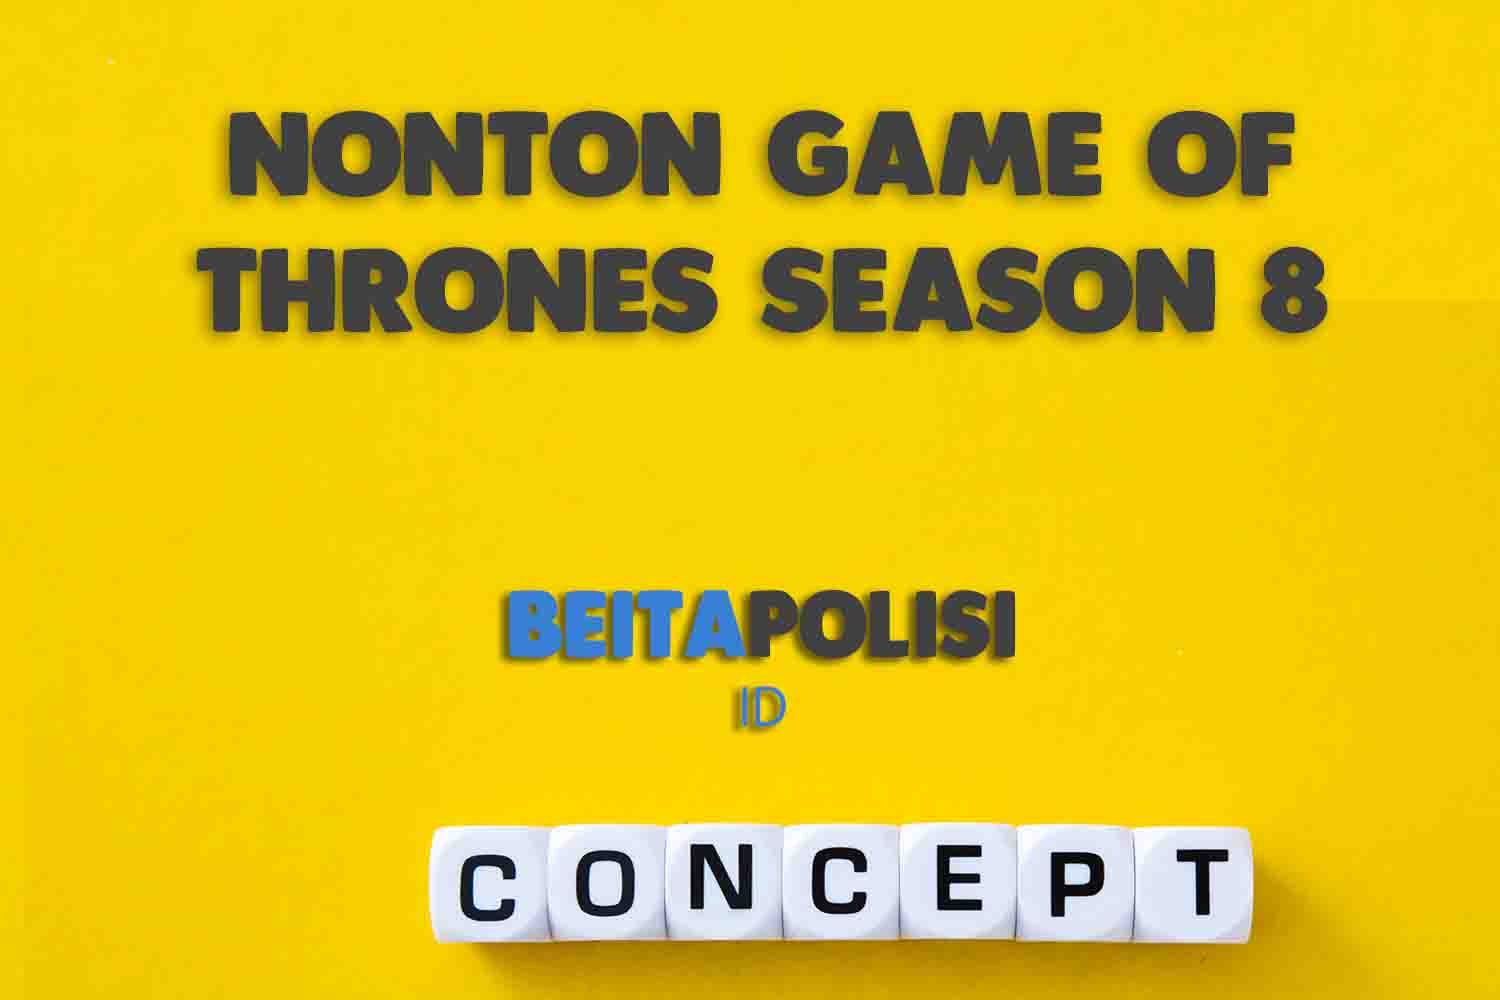 Nonton Game Of Thrones Season 8 Full Episode Sub Indo